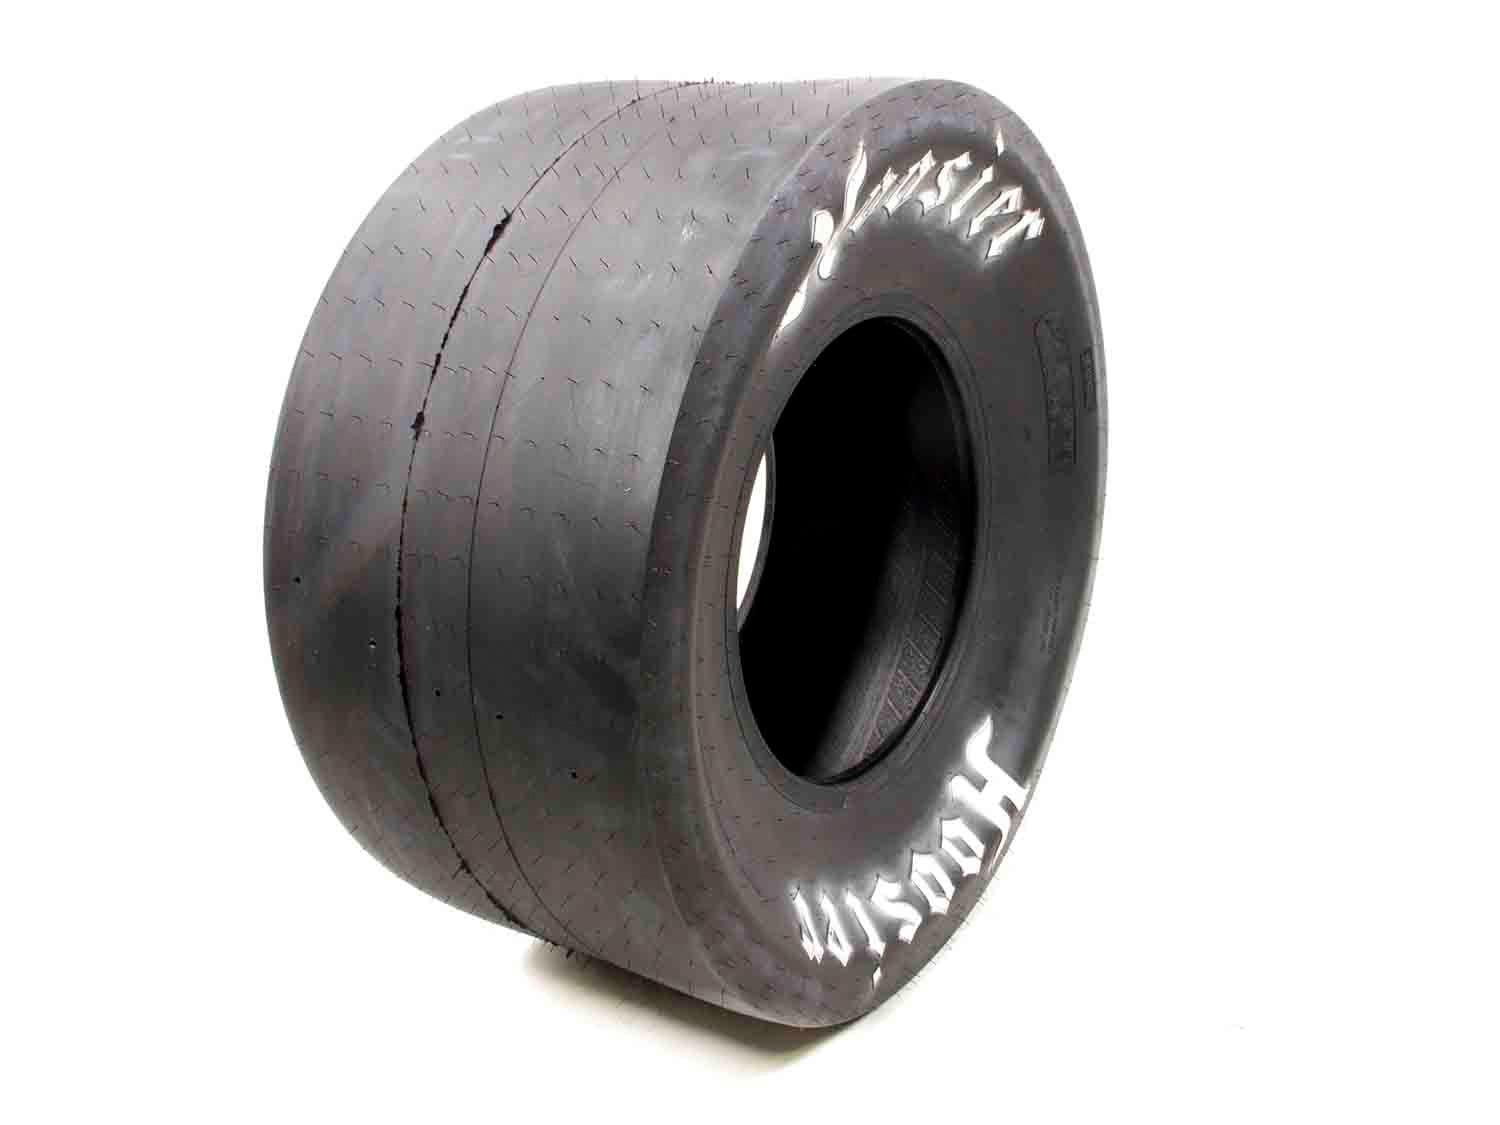 26.0/8-15 Drag Tire - Burlile Performance Products